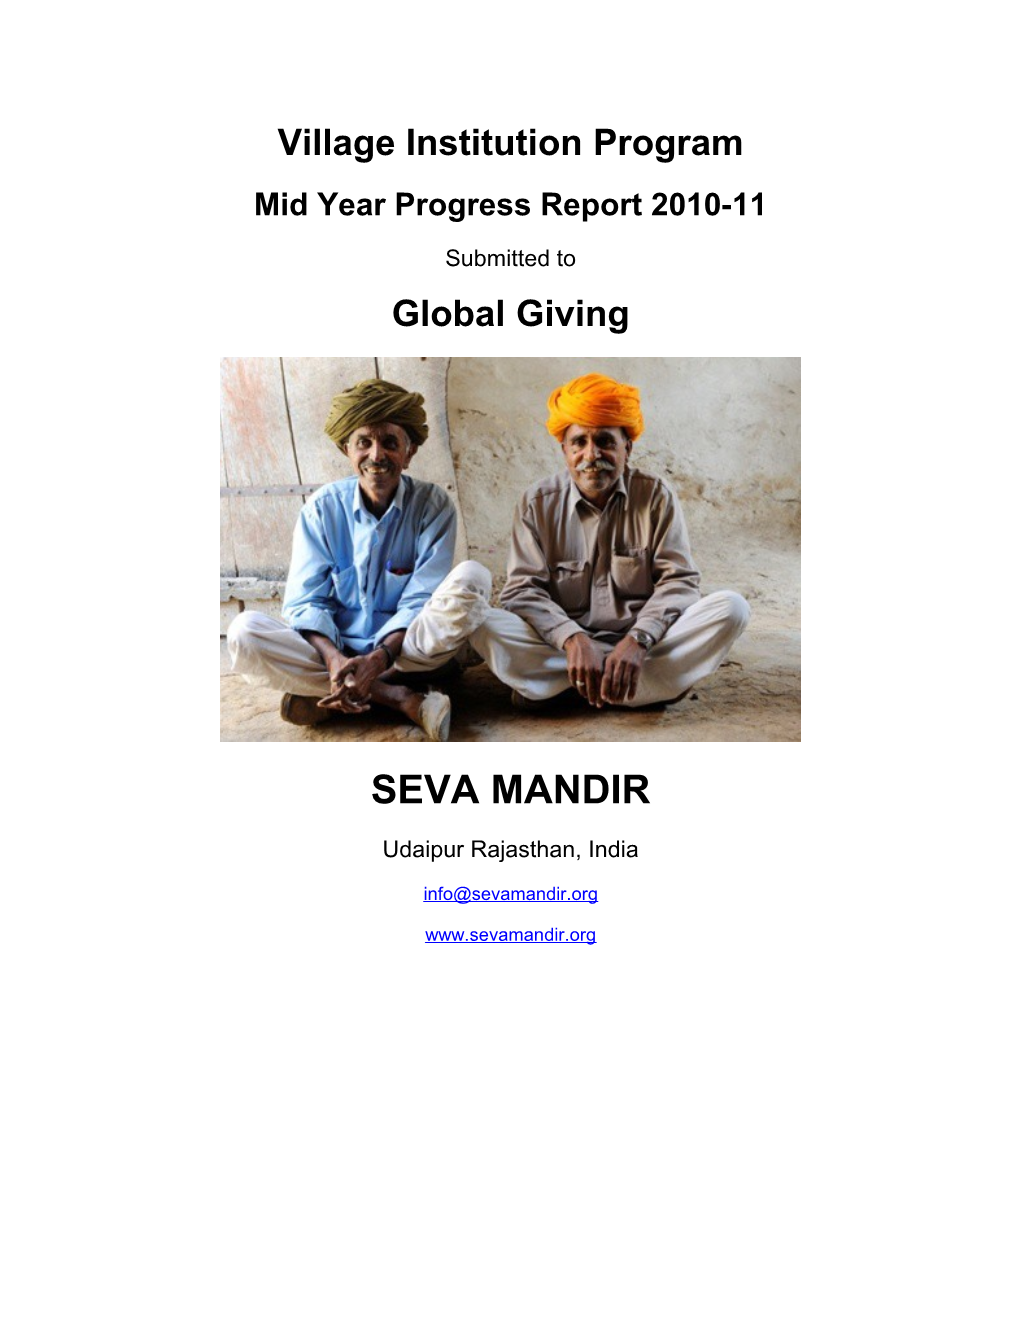 Mid Year Progress Report 2010-11